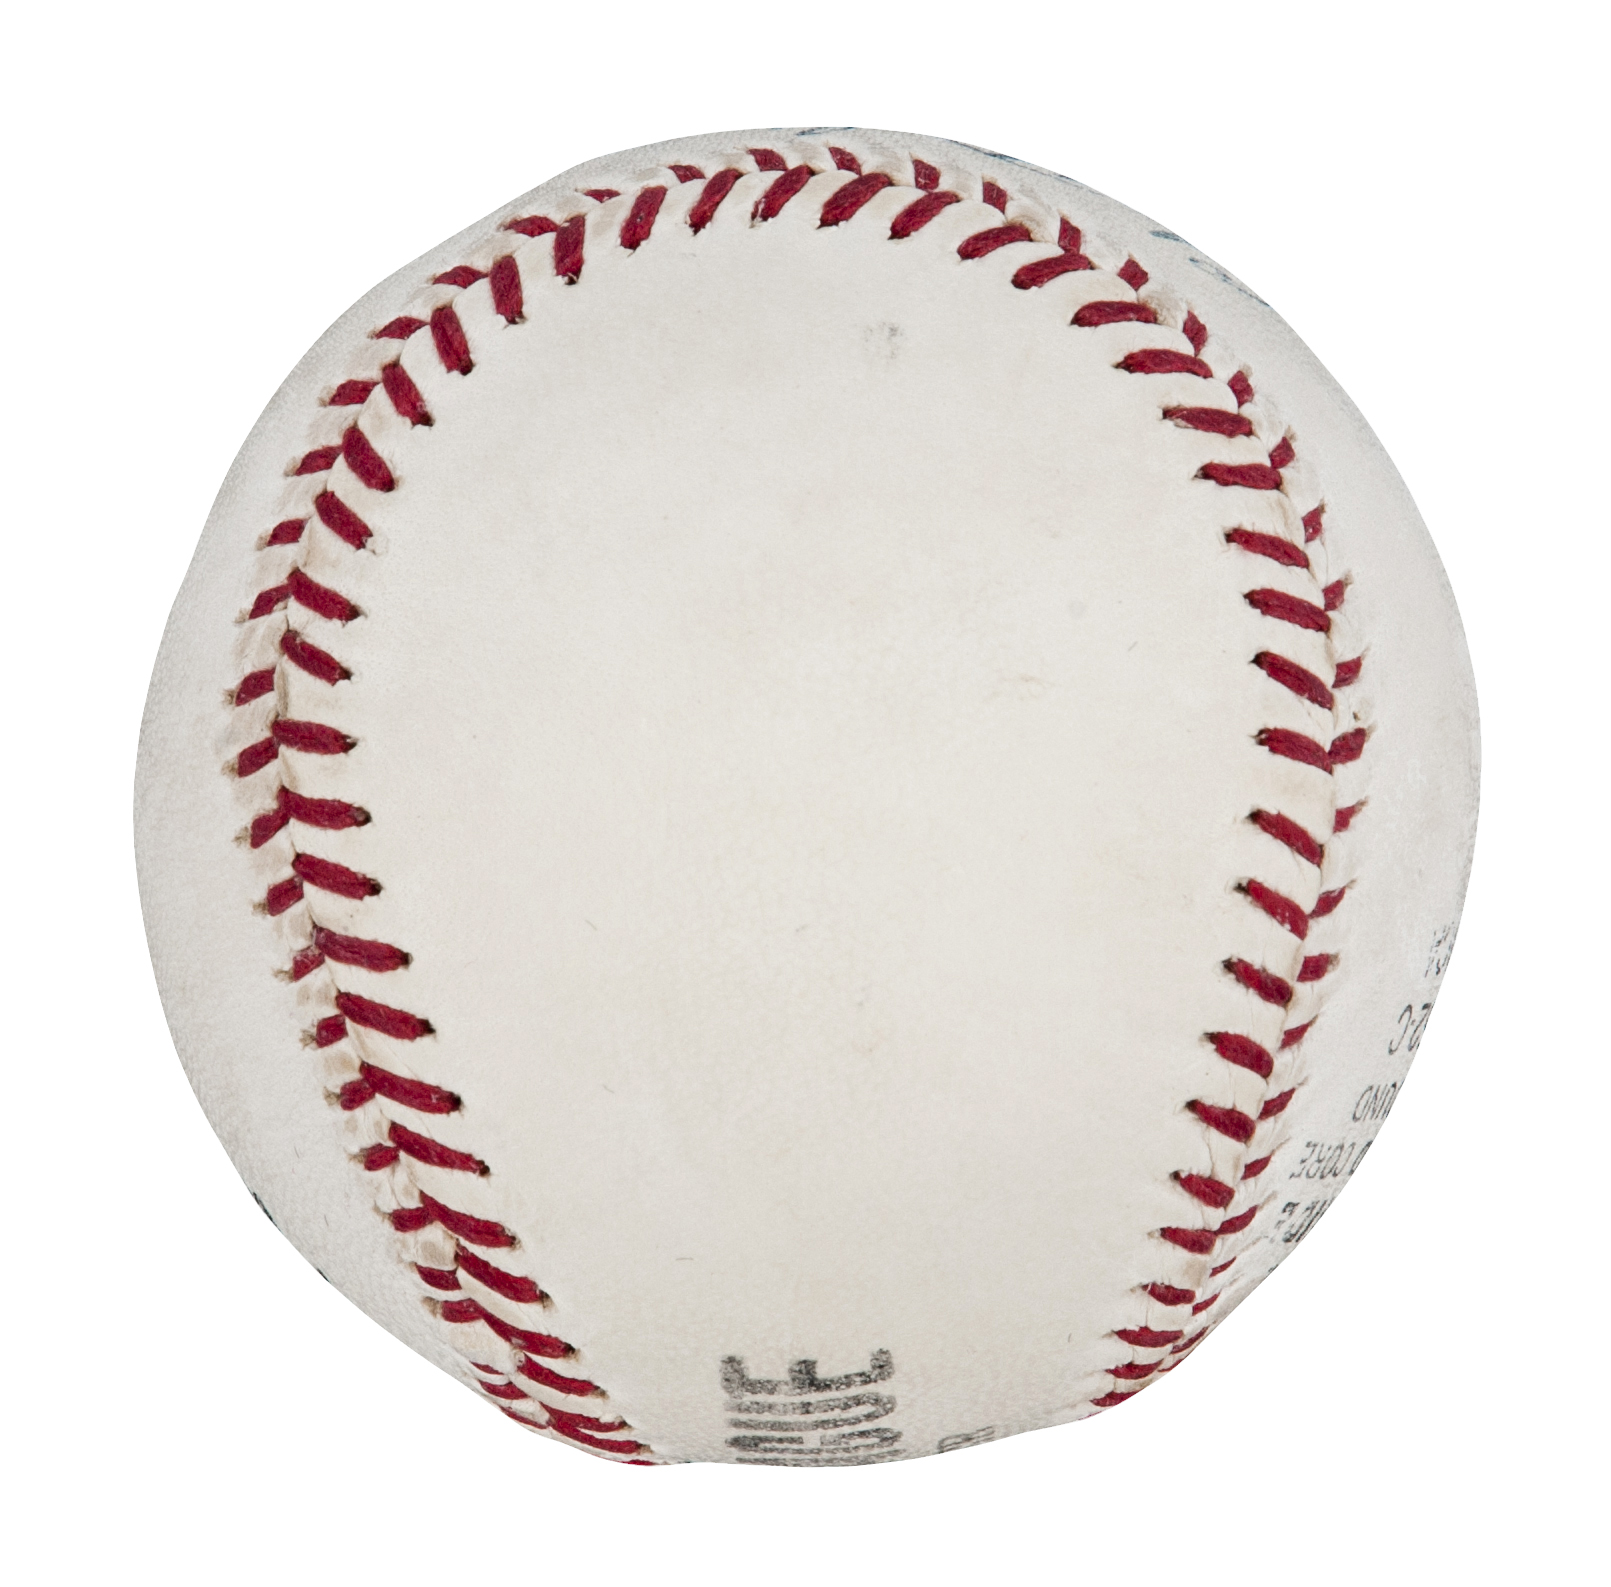 Lot Detail - Lefty Grove Single Signed Baseball Graded Nr. Mint 7 (PSA/DNA)